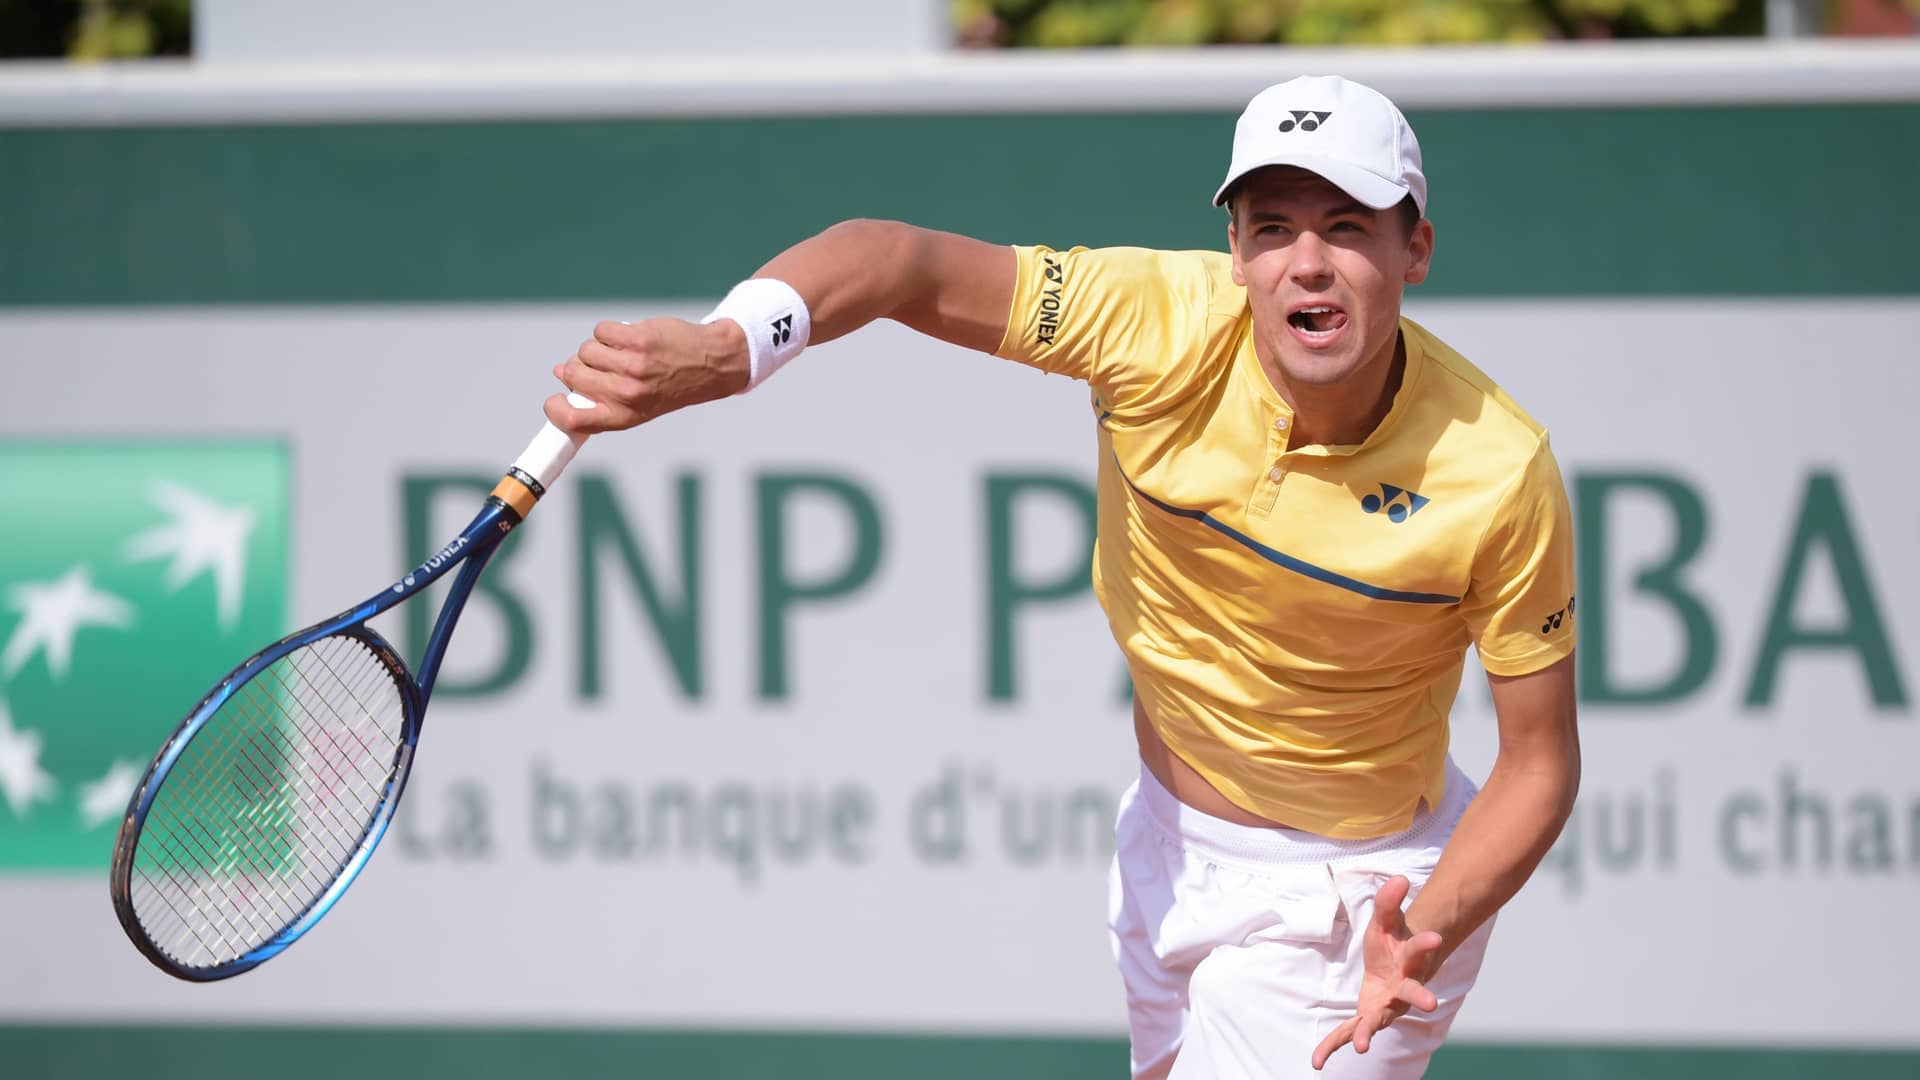 Daniel Altmaier reaches the third round at Roland Garros in his Grand Slam debut.